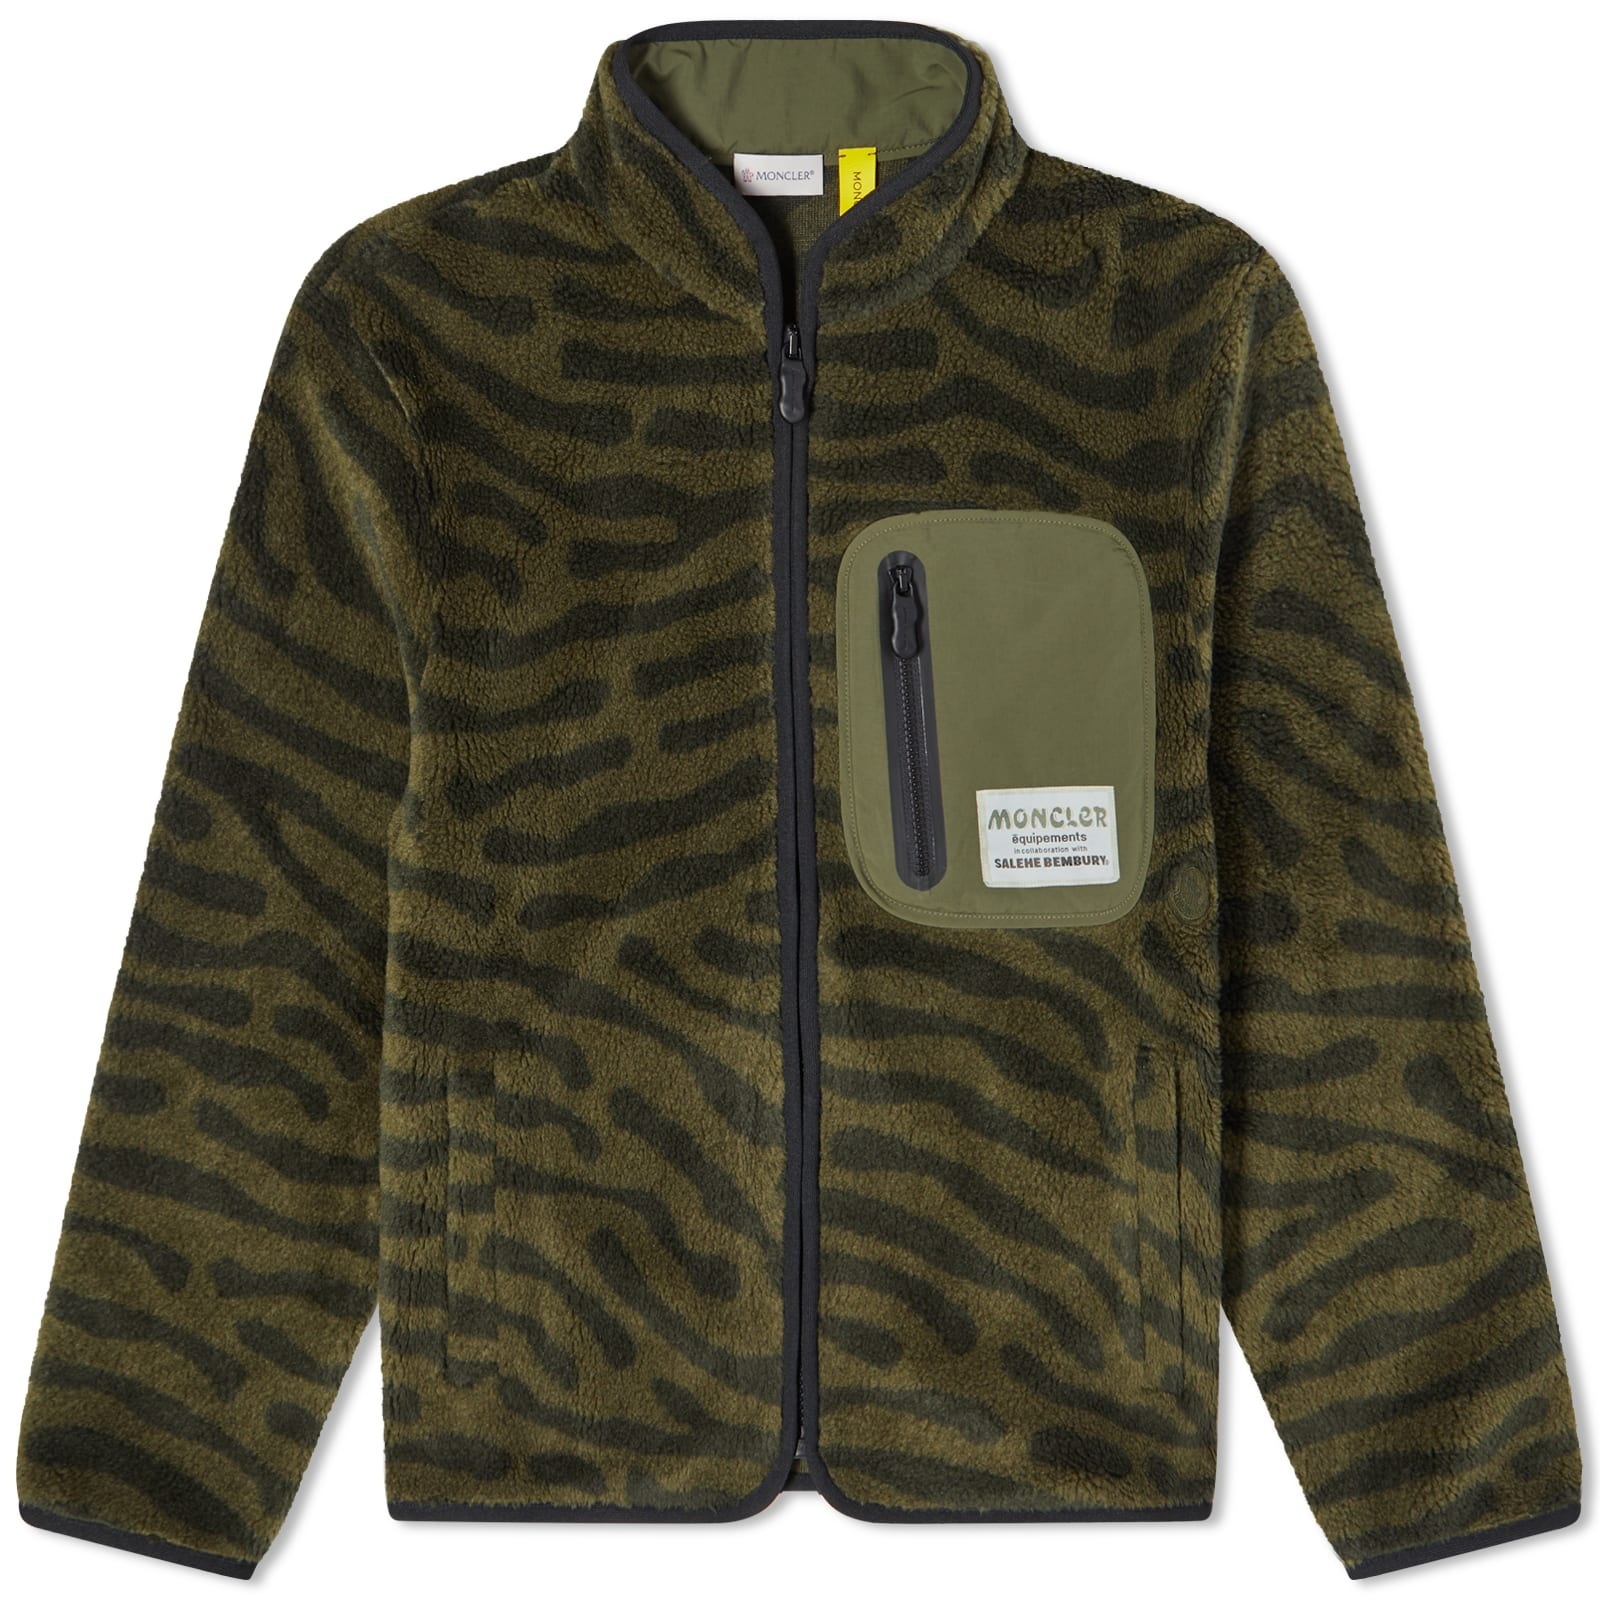 Moncler Genius x Salehe Bembury Fleece Jacket - 1